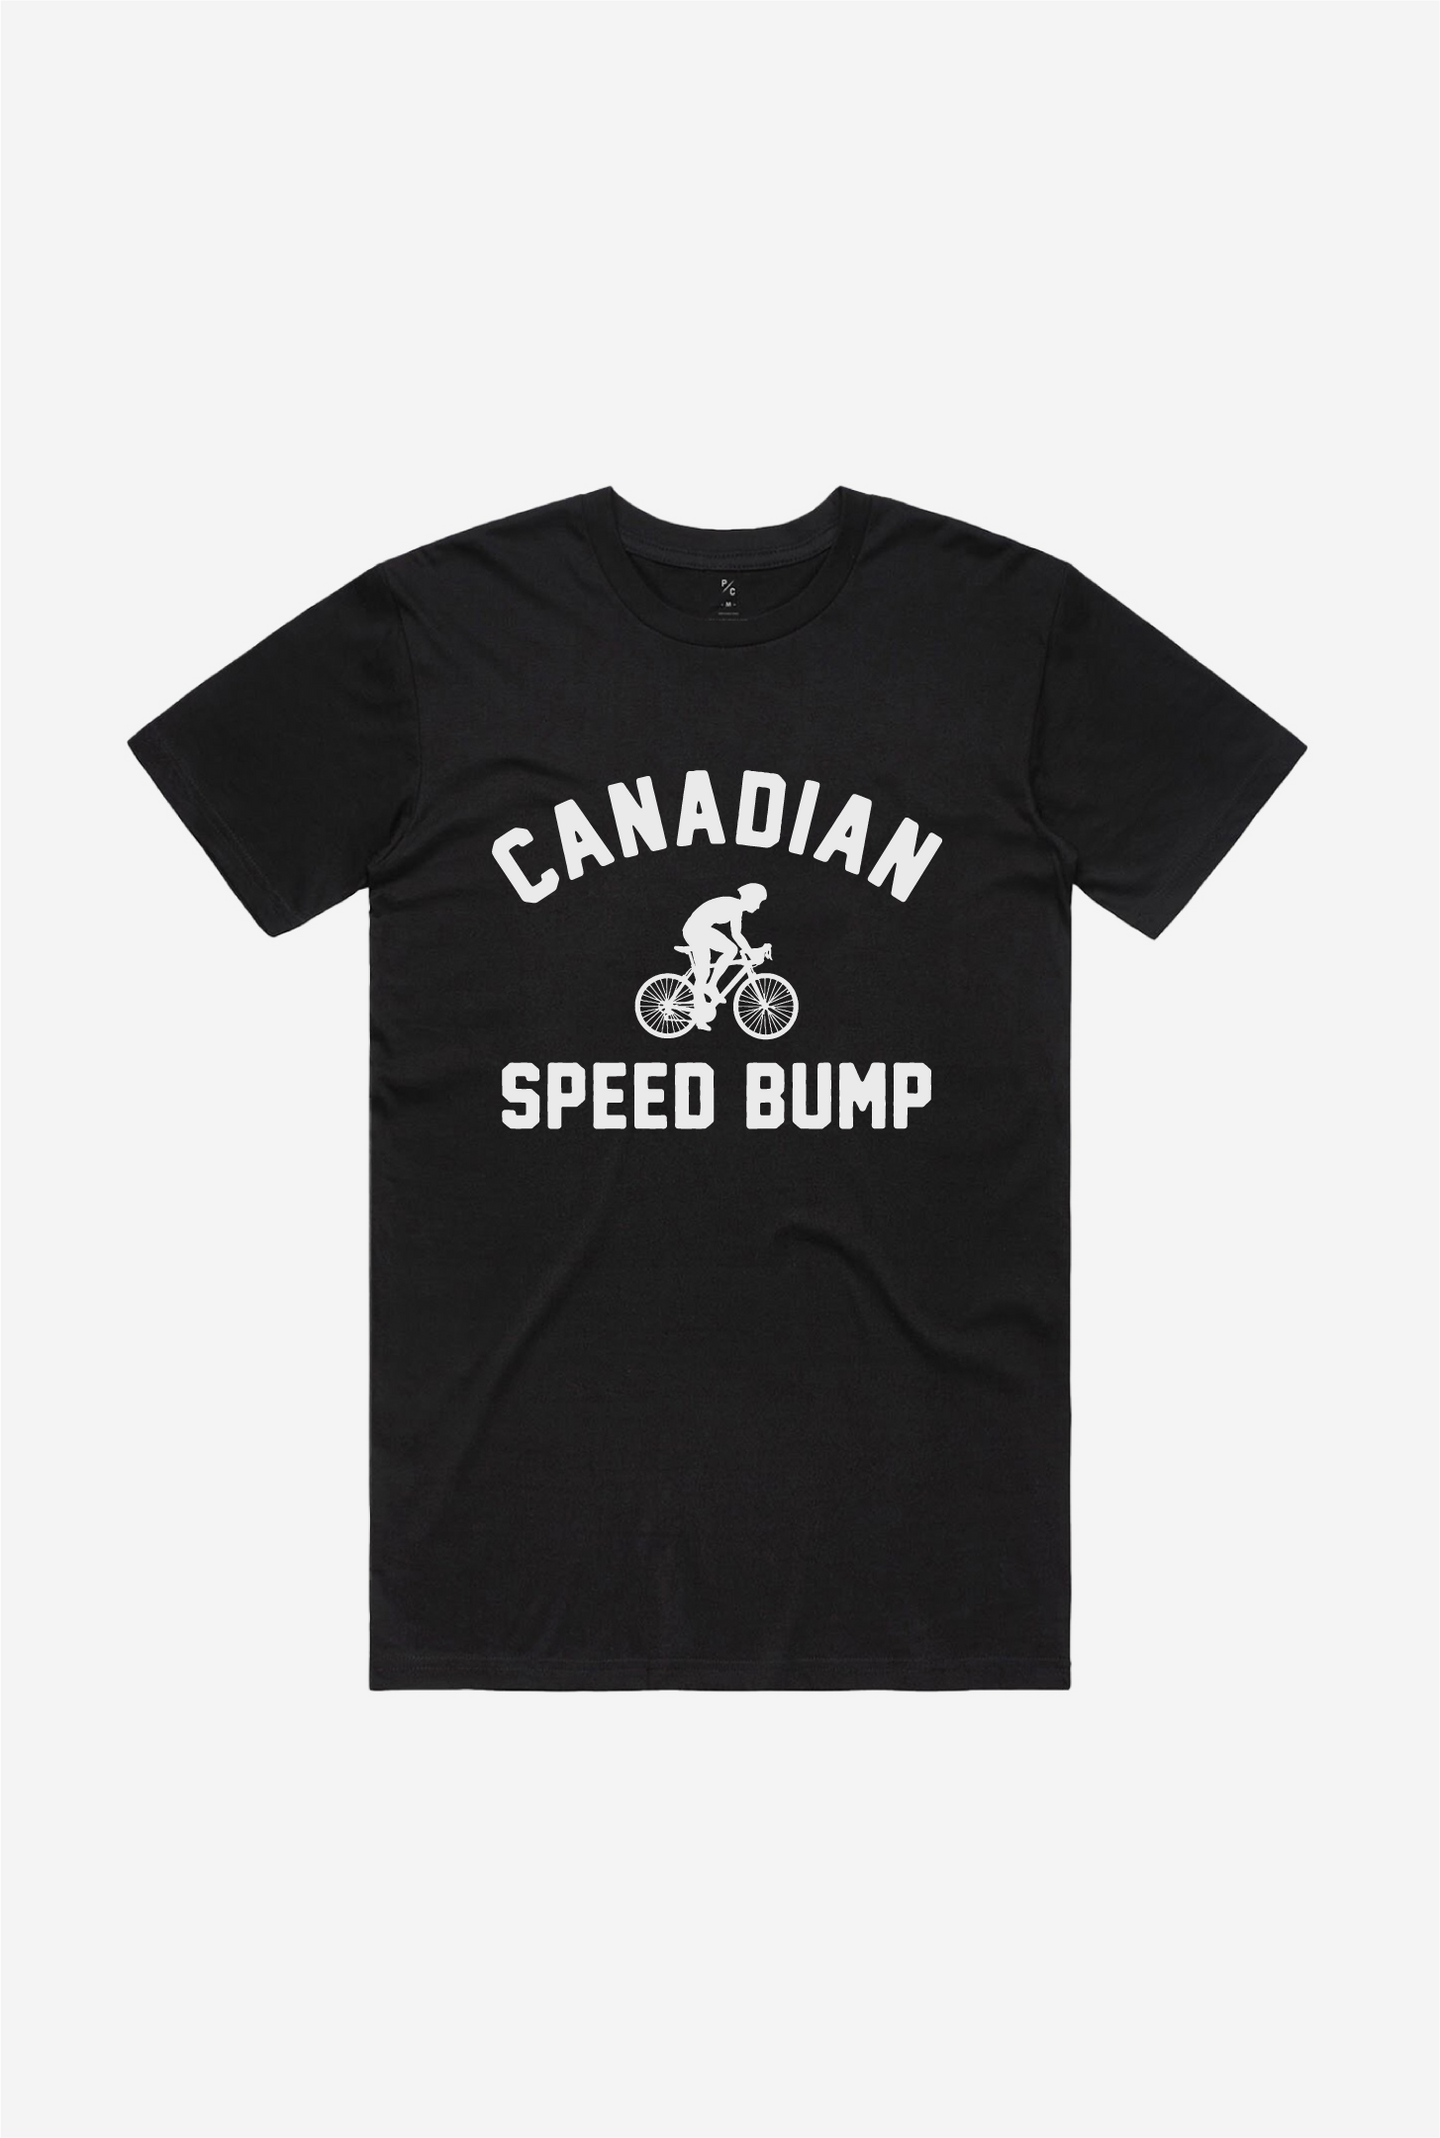 Canadian Speed Bump T-Shirt - Black